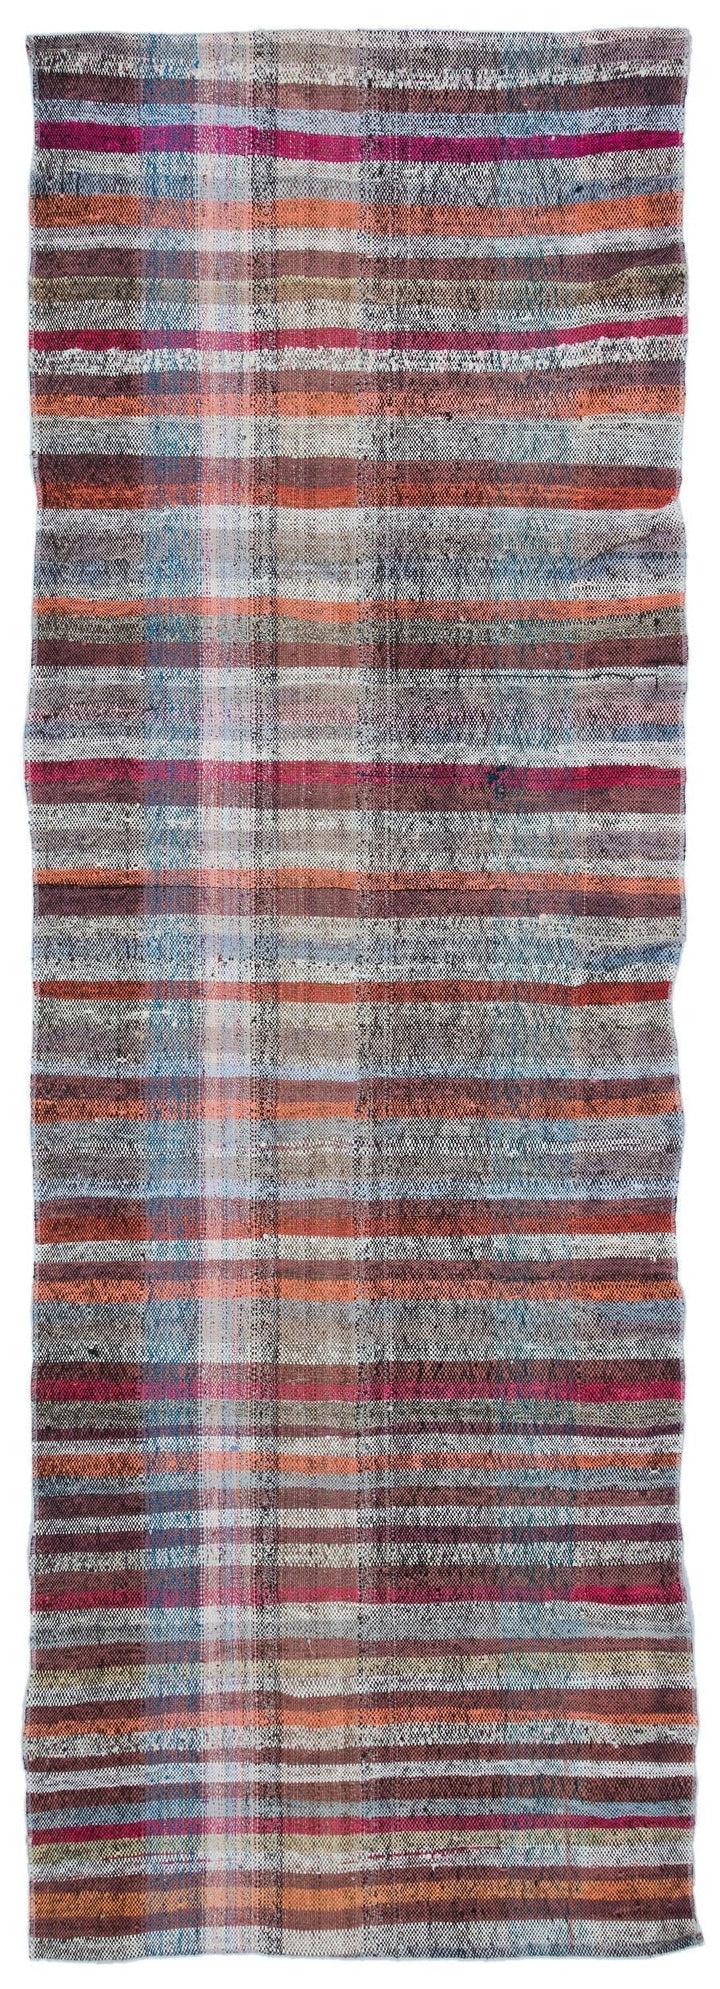 Cretan Brown Striped Wool Hand-Woven Carpet 091 x 258